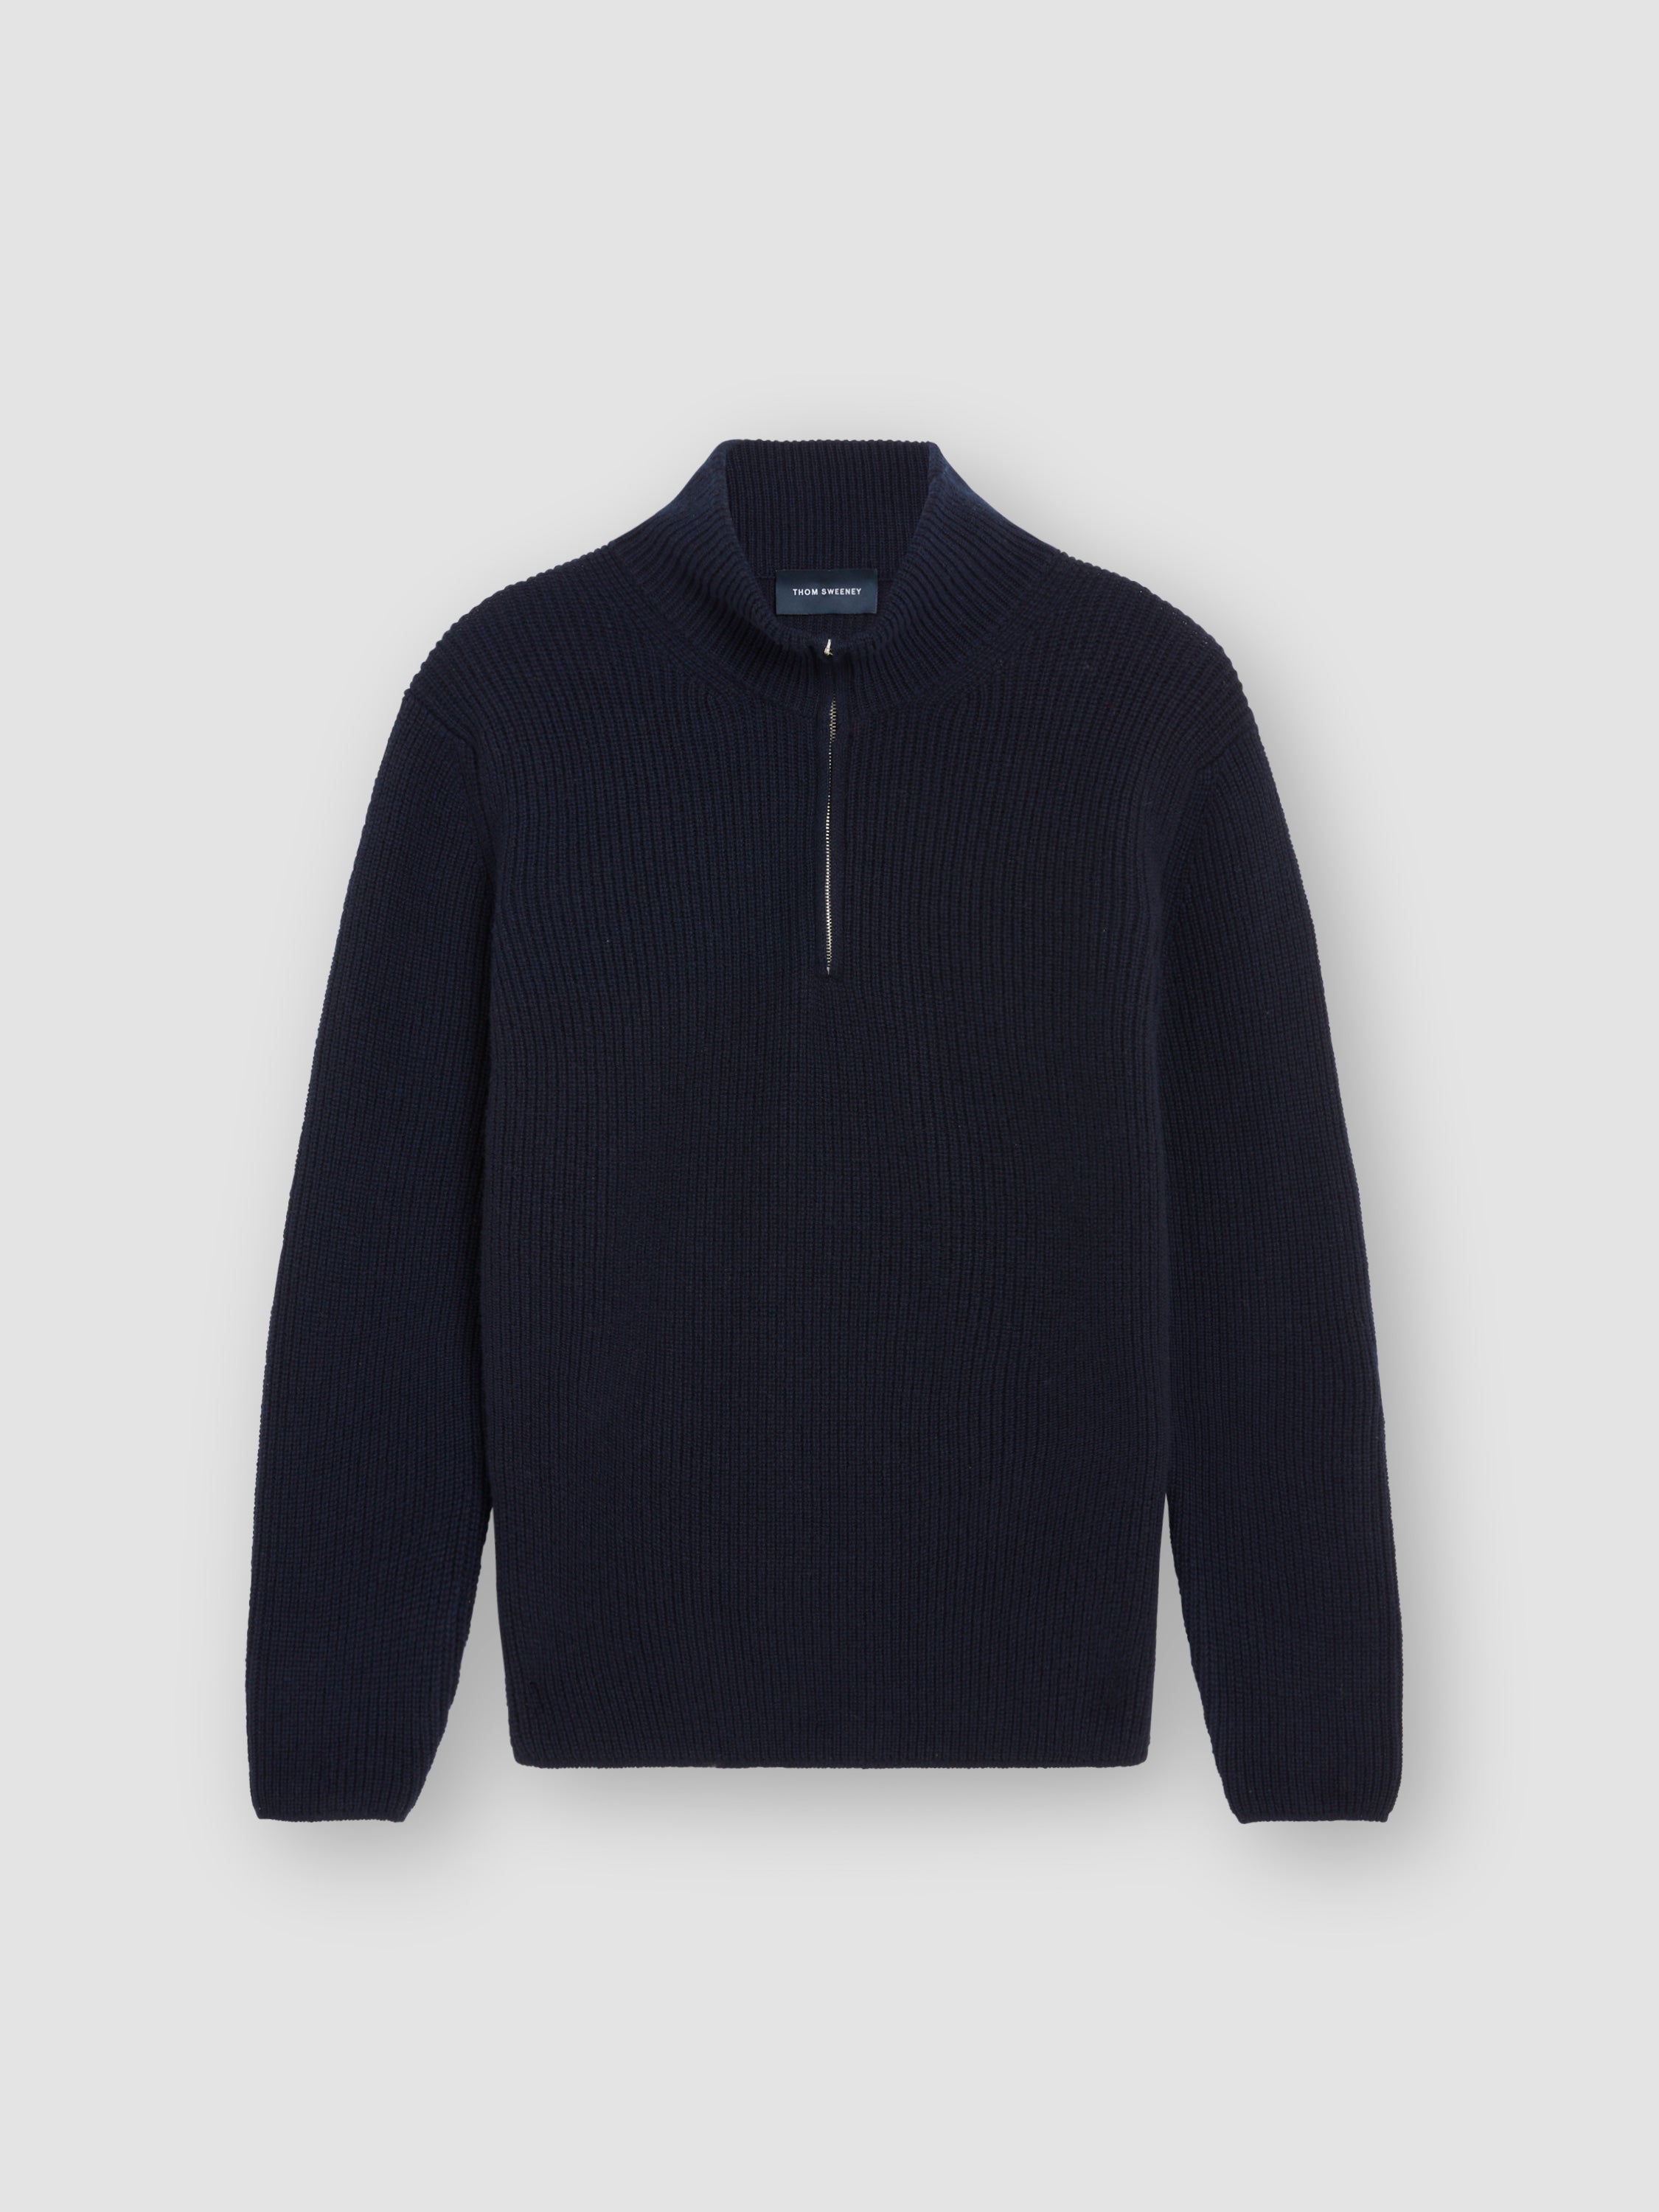 Wool Cashmere Half-Zip Fisherman Sweater Navy Product Image